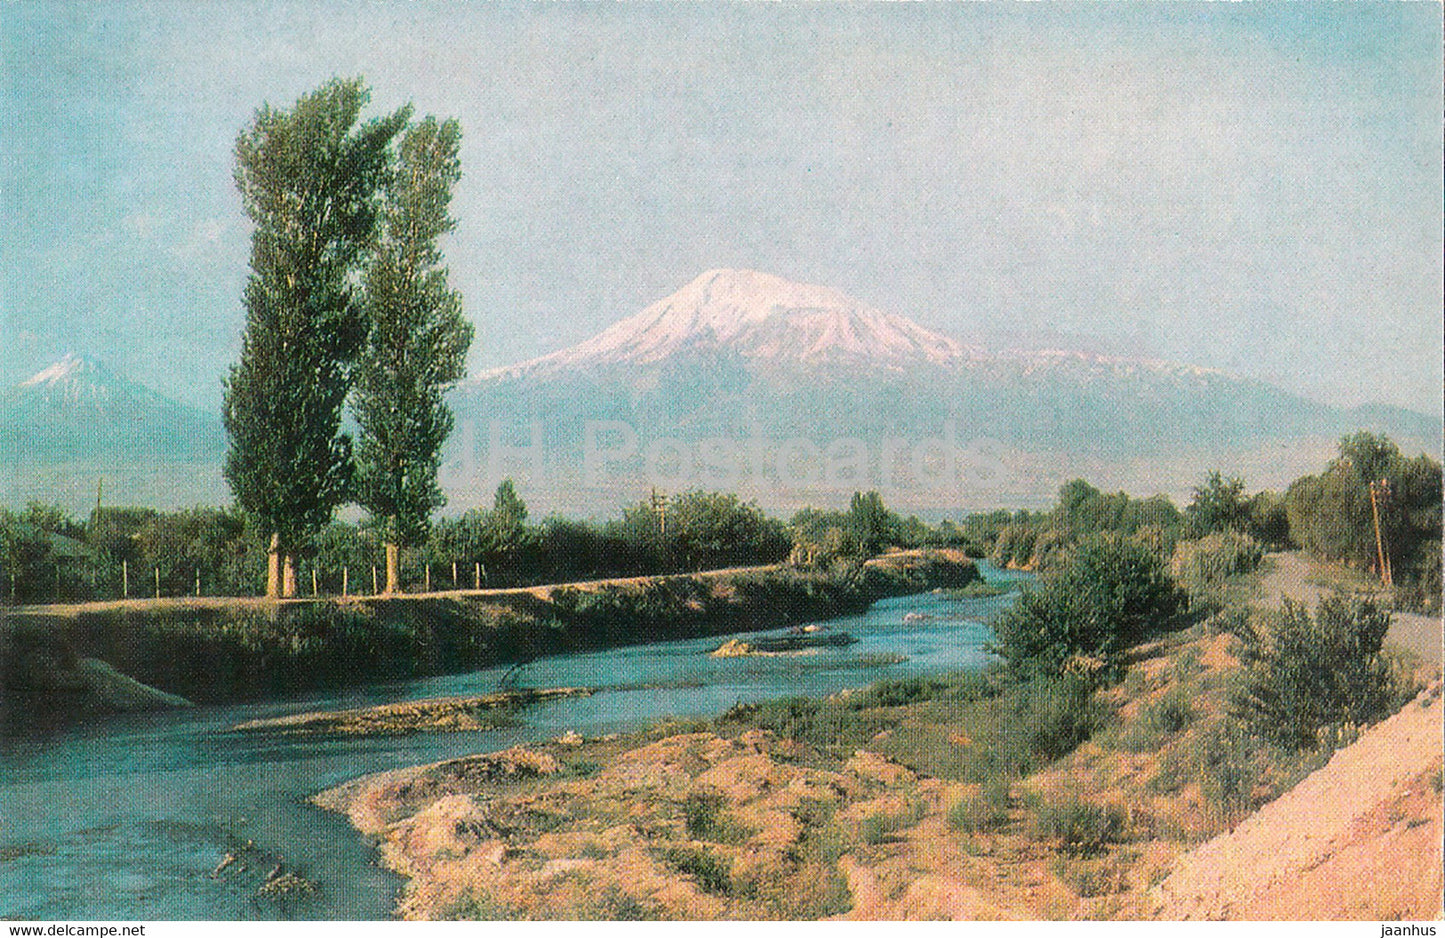 Valley of Ararat mountain - Armenia USSR - unused - JH Postcards